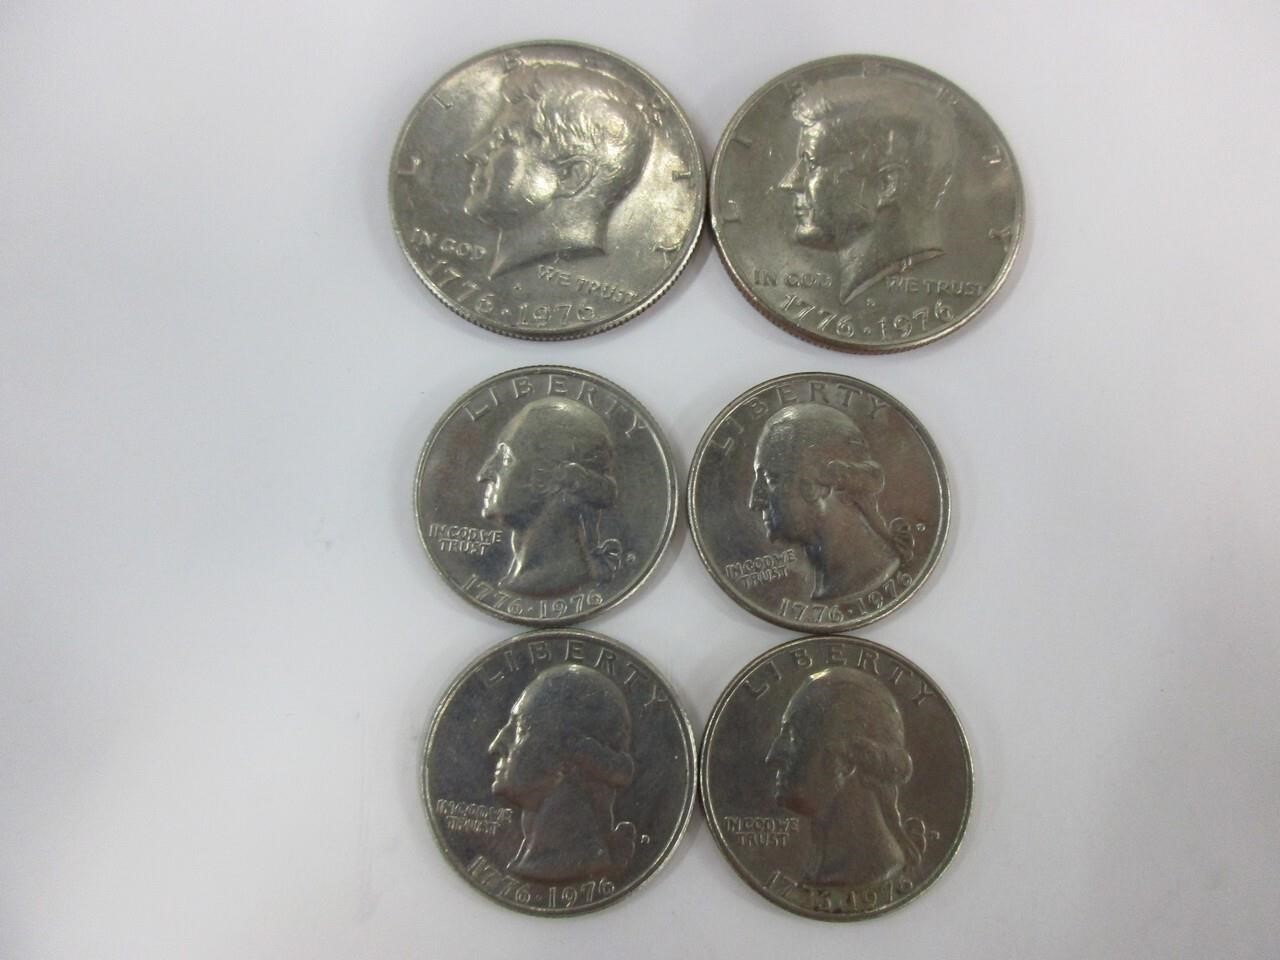 4 bicentennial coins, 2 half dollars, 4 quarters